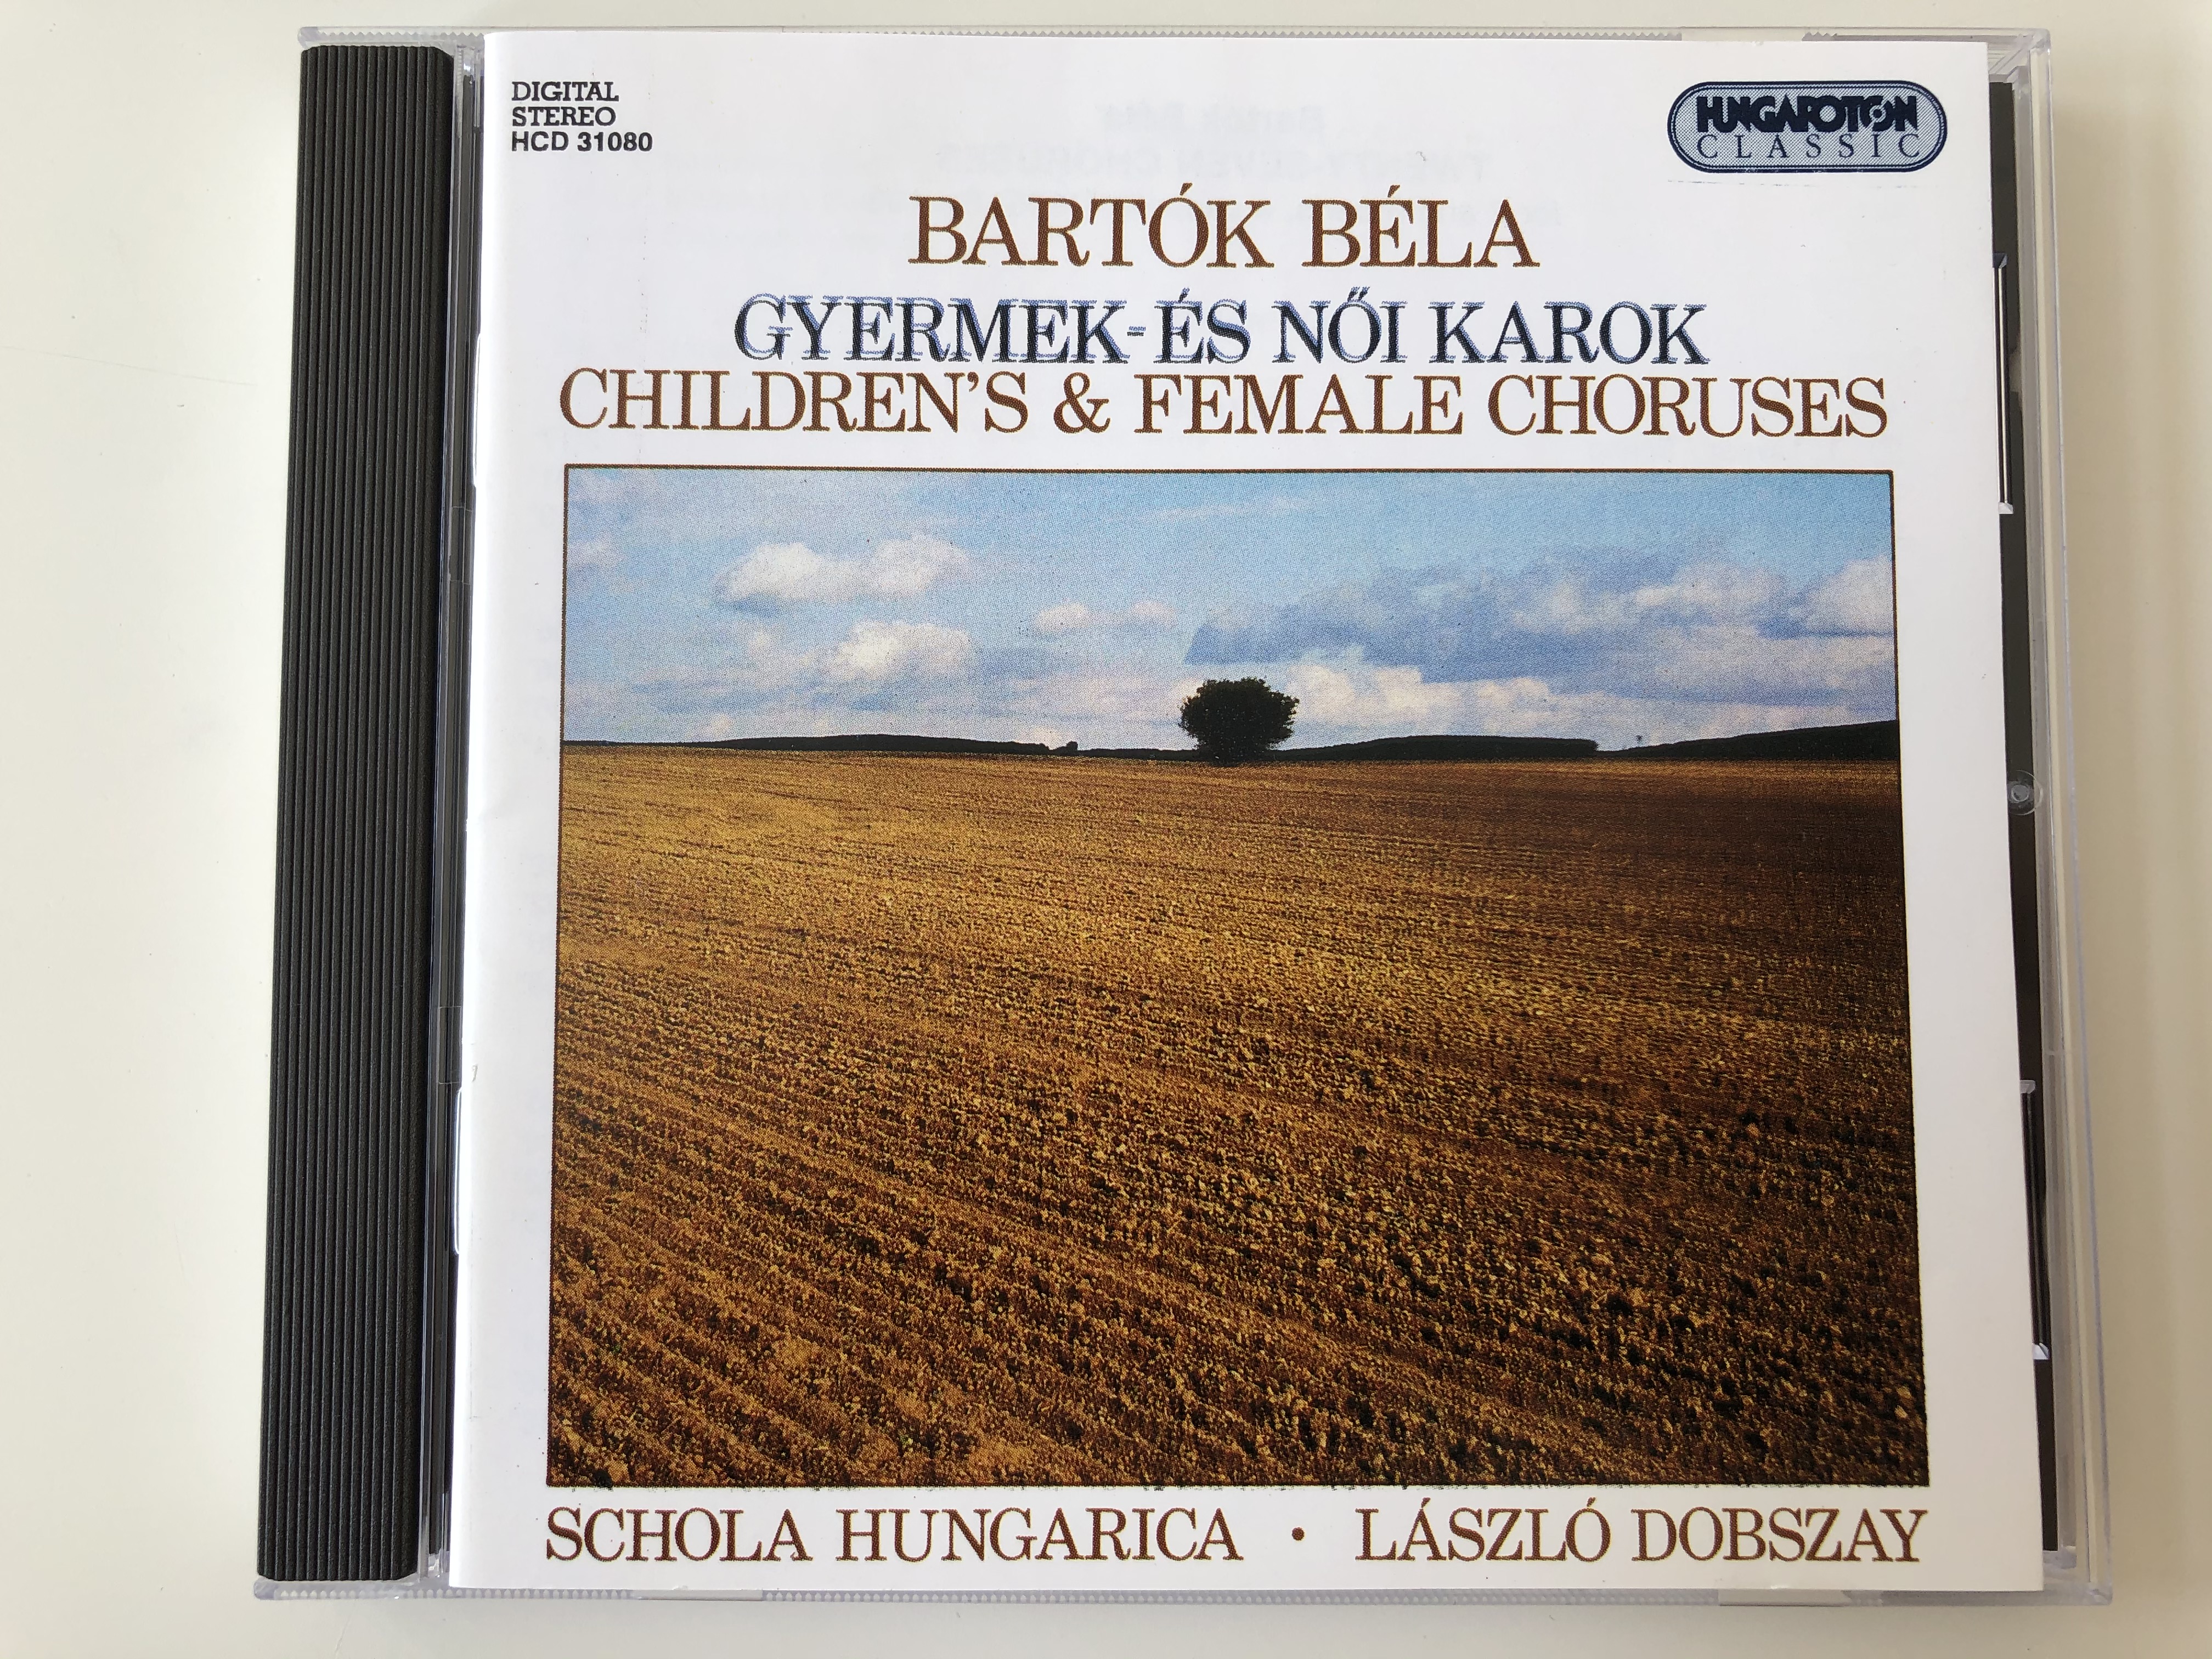 bart-k-b-la-gyermek-es-noi-karok-children-s-female-choruses-schola-hungarica-l-szl-dobszay-hungaroton-classic-audio-cd-1994-stereo-hcd-31080-1-.jpg